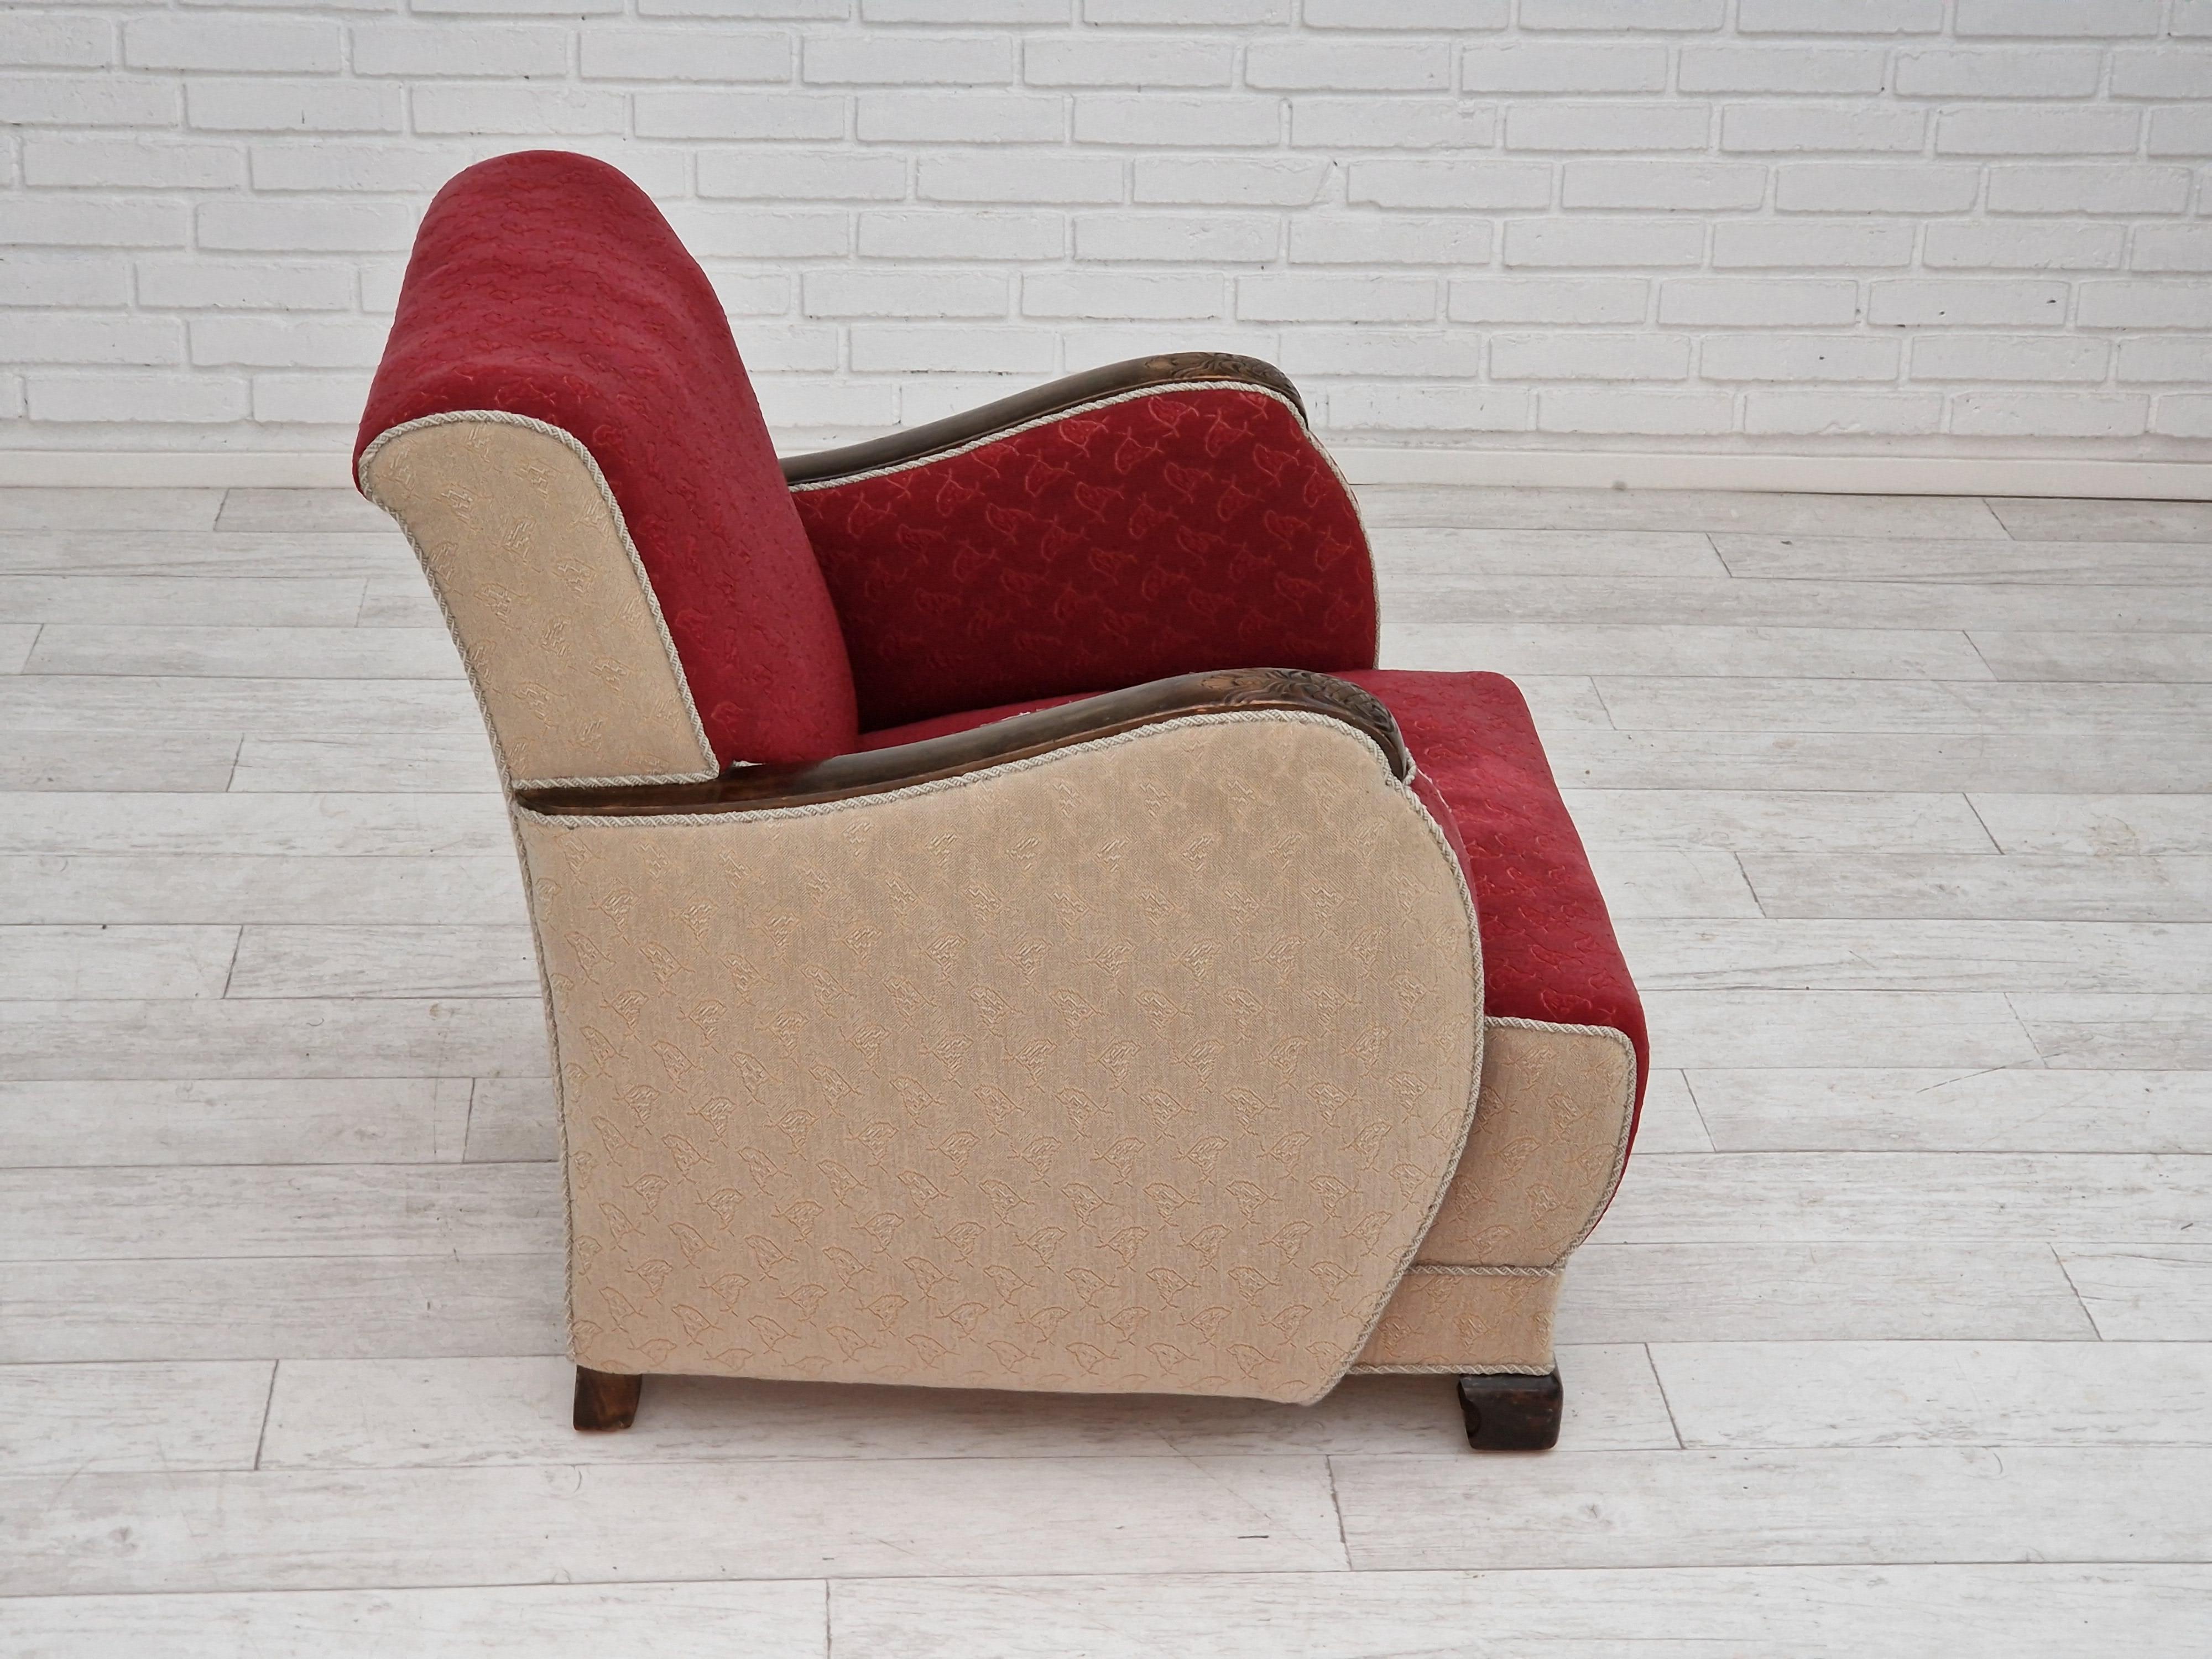 1950s, Scandinavian Art Deco Chairs, Original Condition For Sale 3